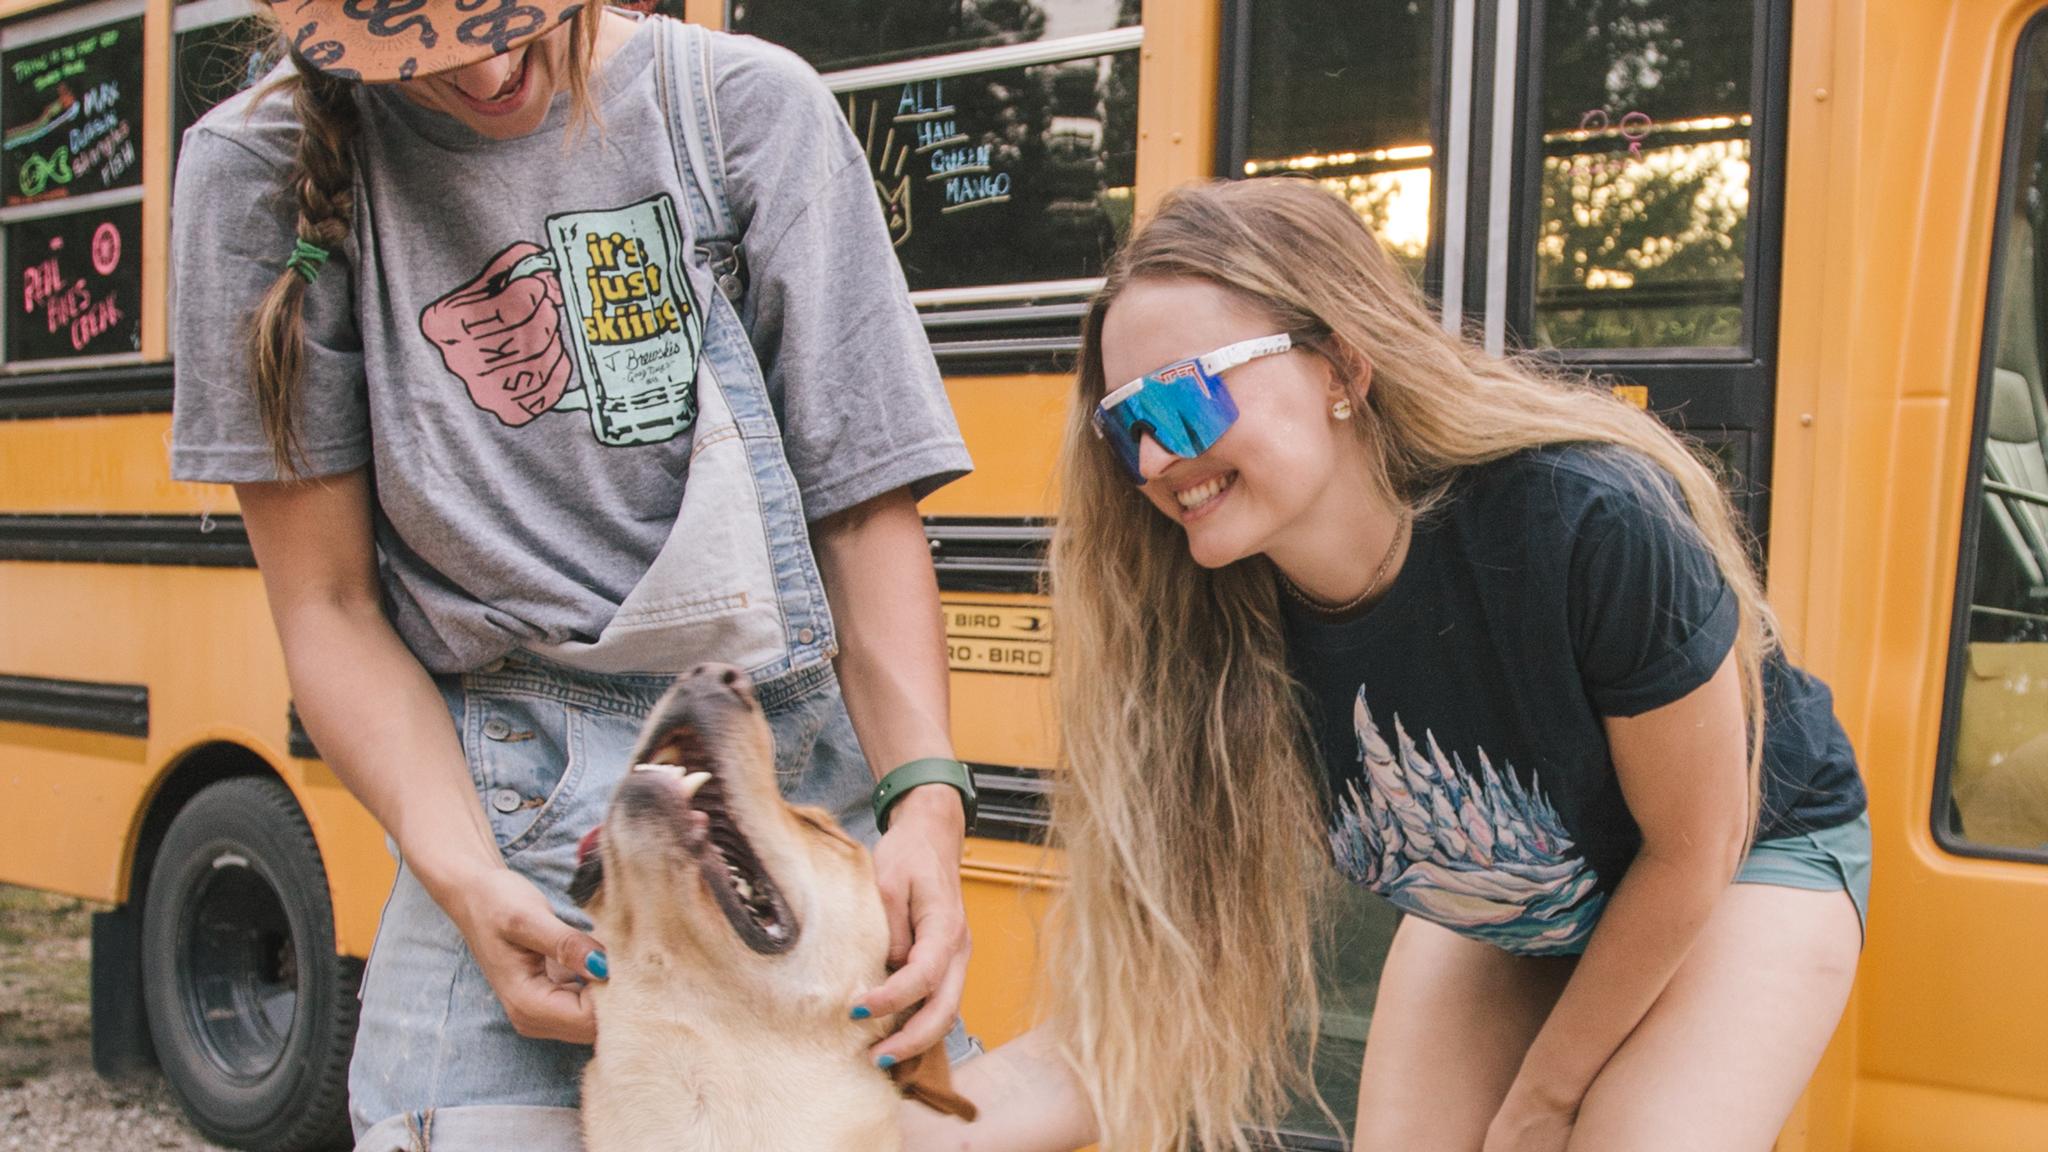 Two girls wearing J skis t-shirts petting a dog